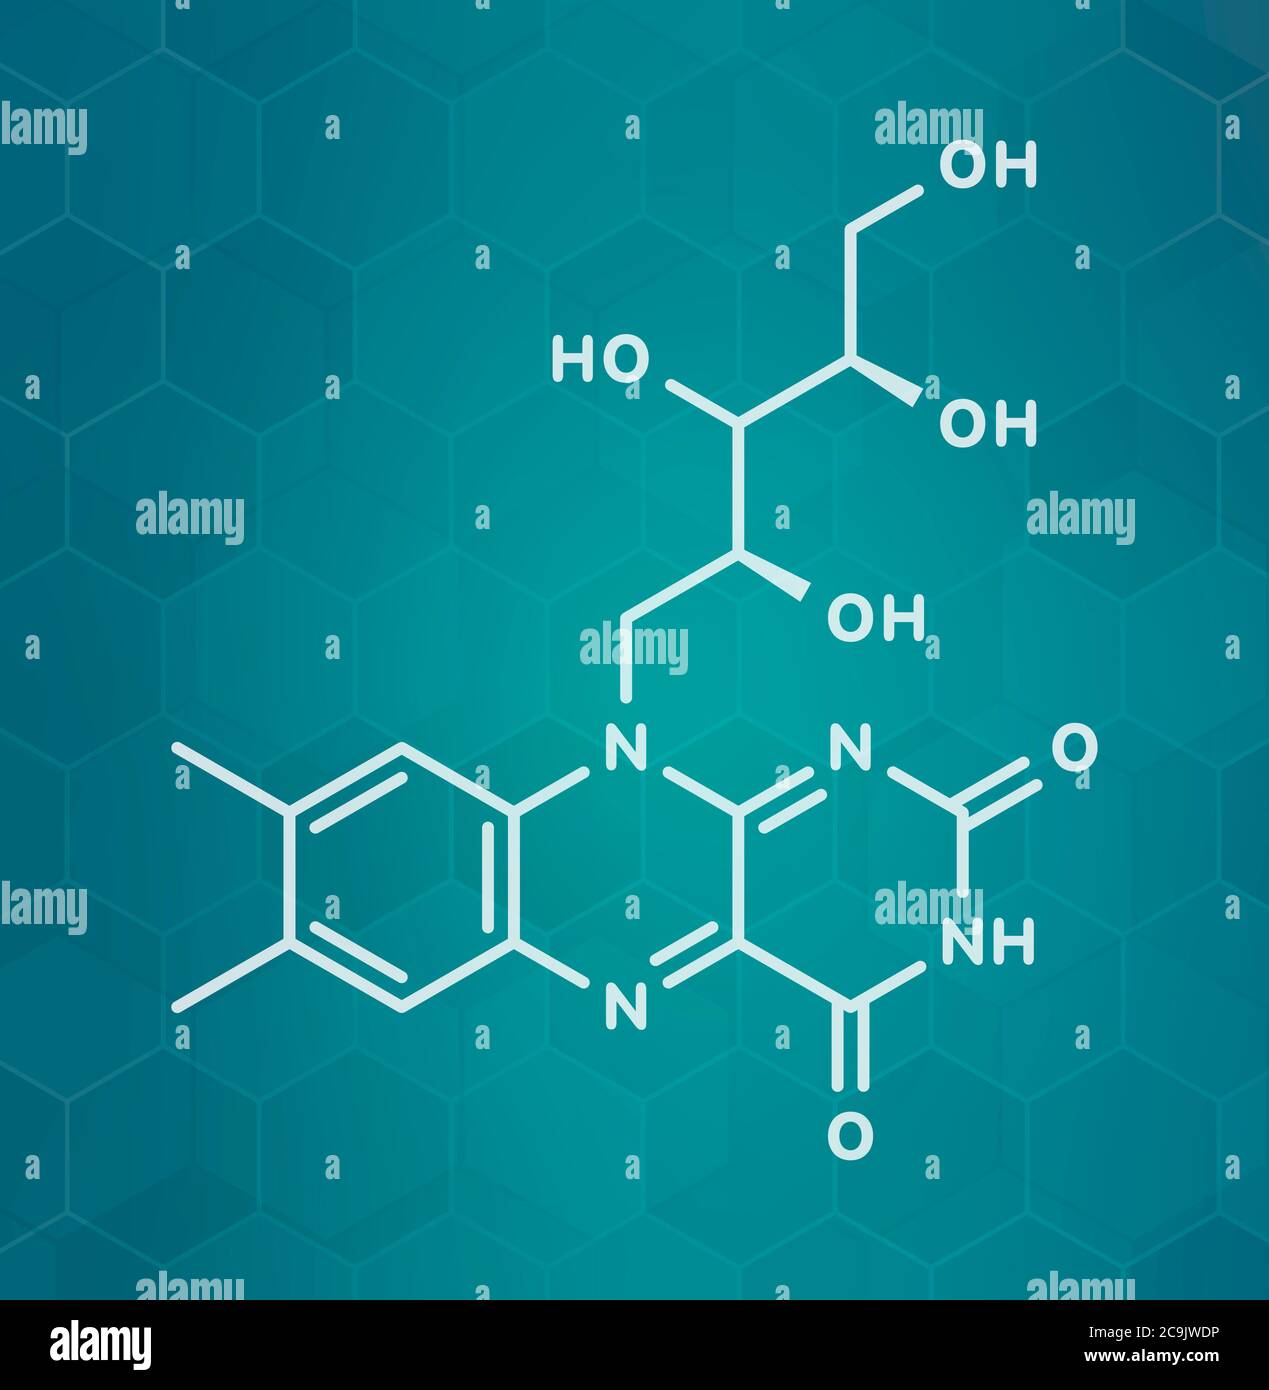 Vitamin B2 (riboflavin) molecule. White skeletal formula on dark teal gradient background with hexagonal pattern. Stock Photo